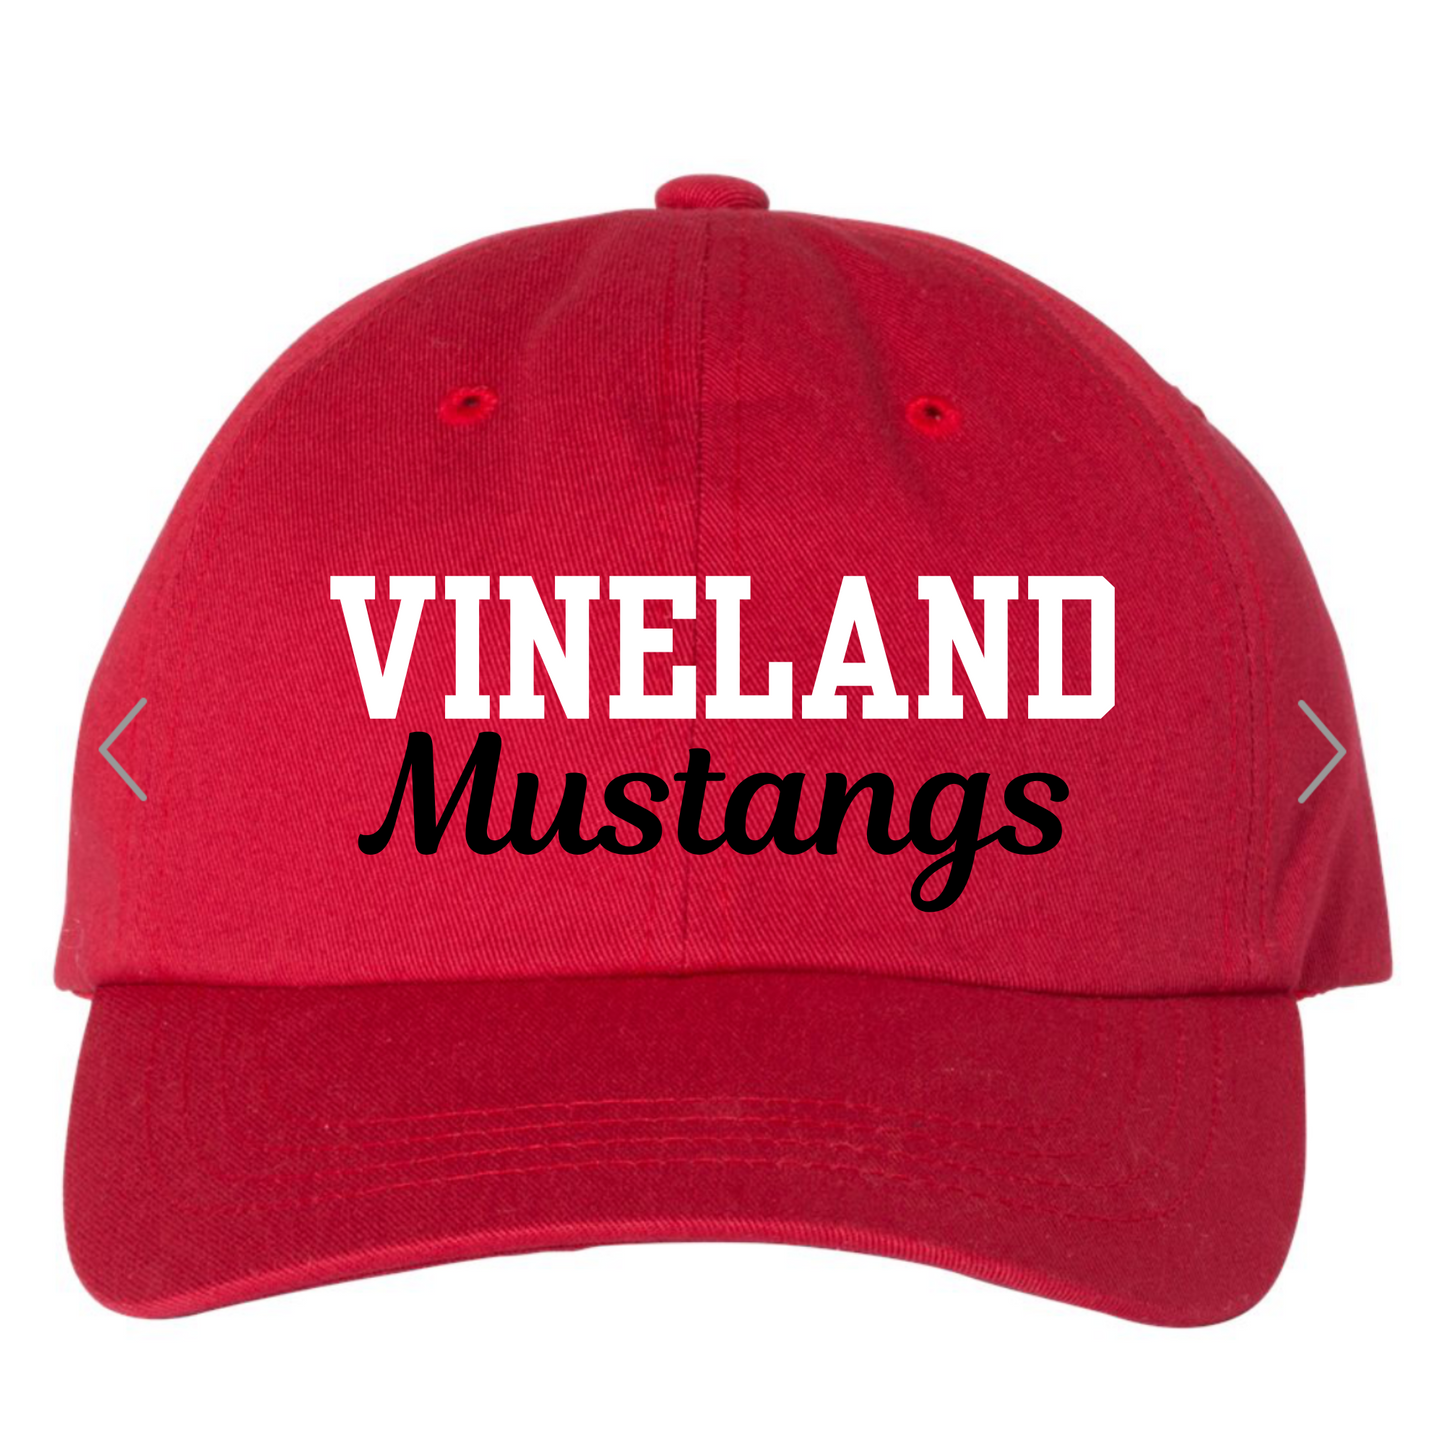 Vineland Mustangs Dad Cap